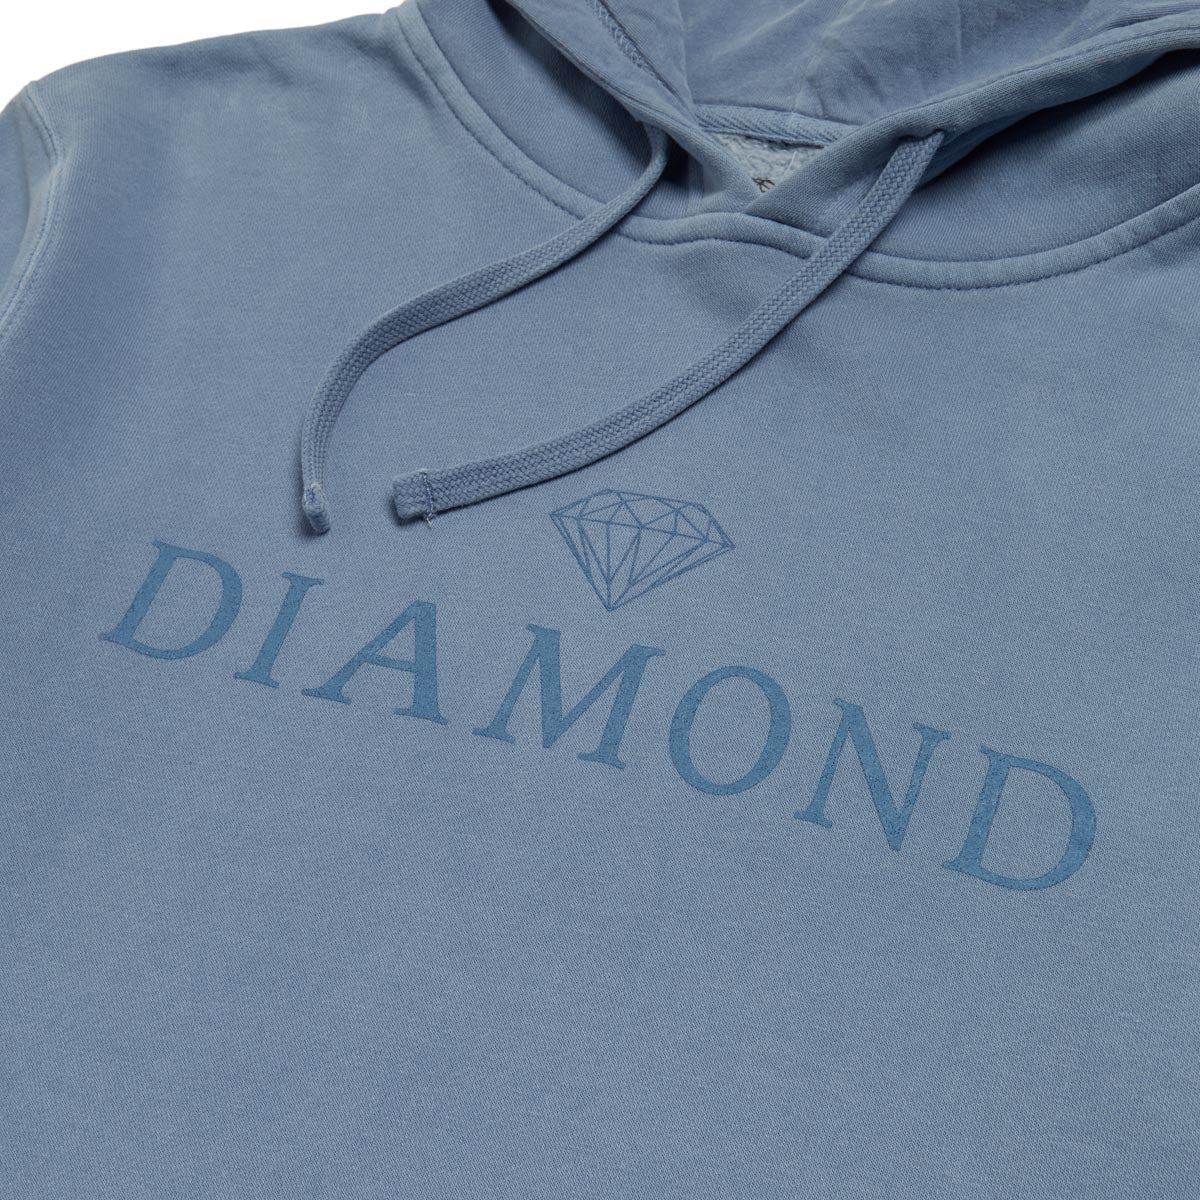 Diamond Supply Co. Classic Hoodie - Pigment Light Blue image 2